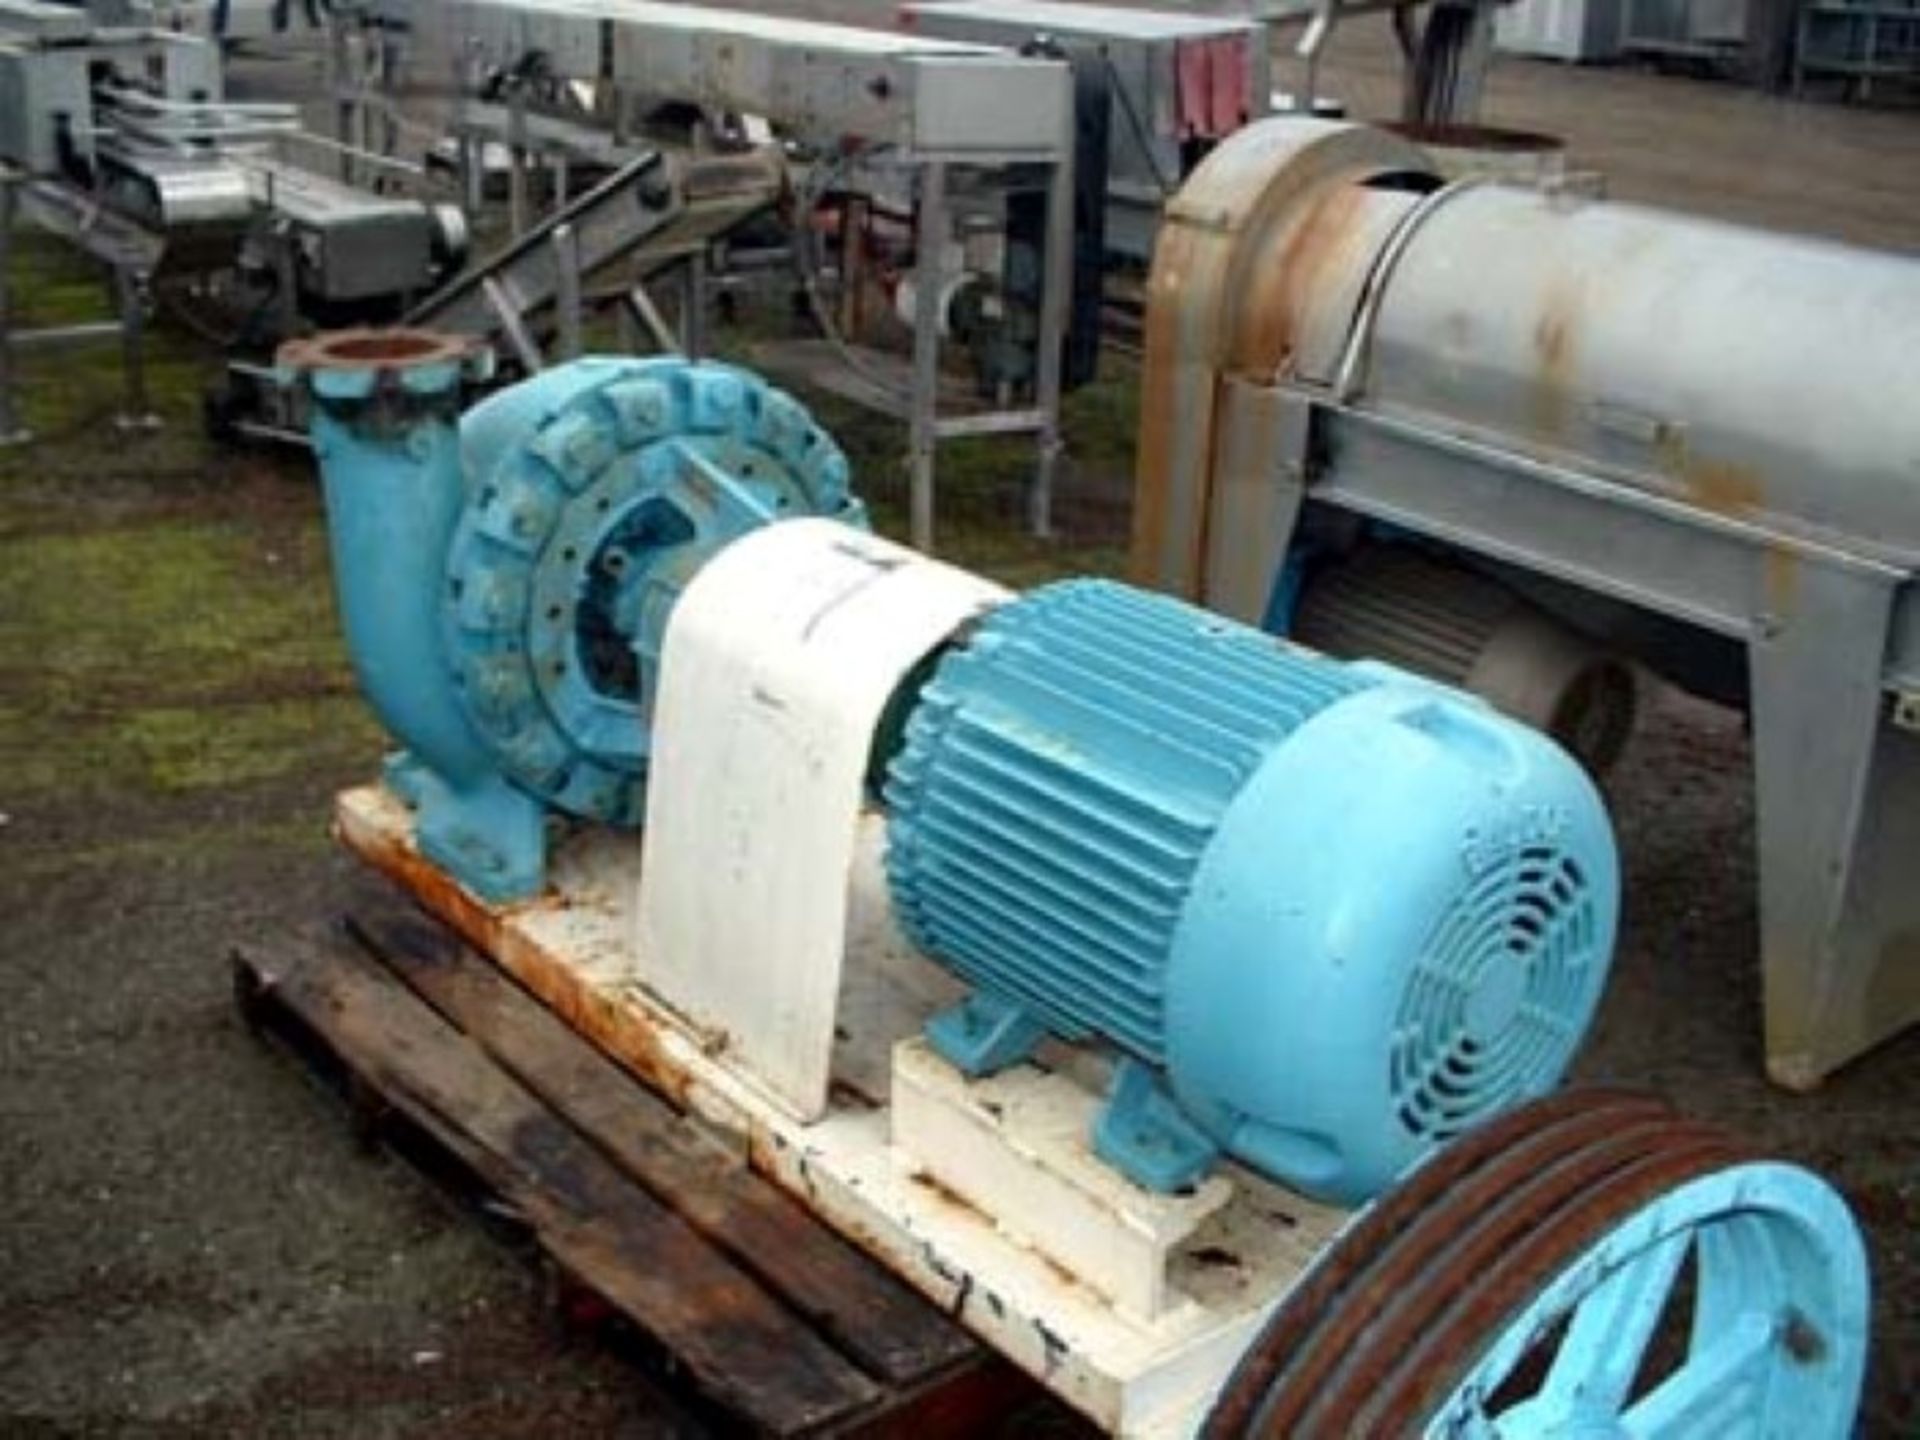 (Located in Morgan Hill, CA) ITT/AC Pump, Model F8M1 Trash Pump, SN 52-430-275-001, 8" Inlet - Image 4 of 5